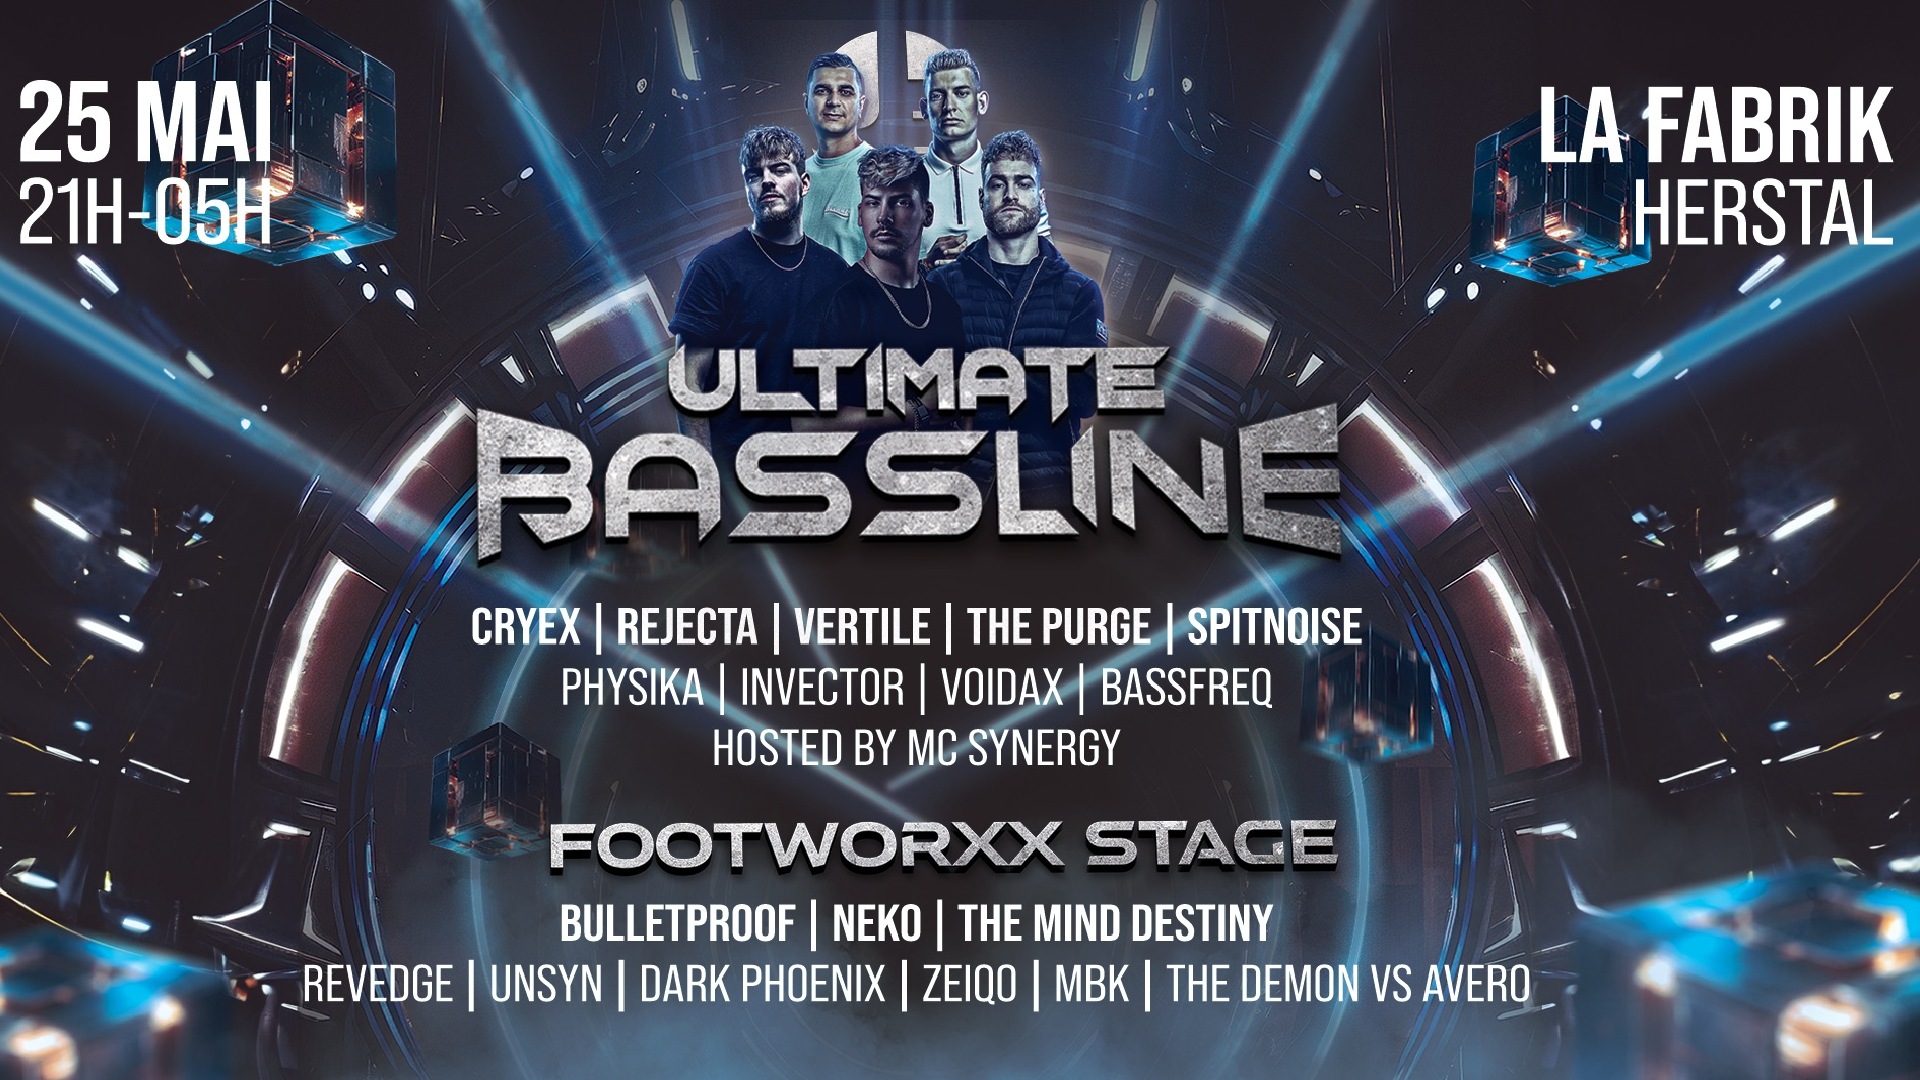 Affiche du festival Ultimate Bassline